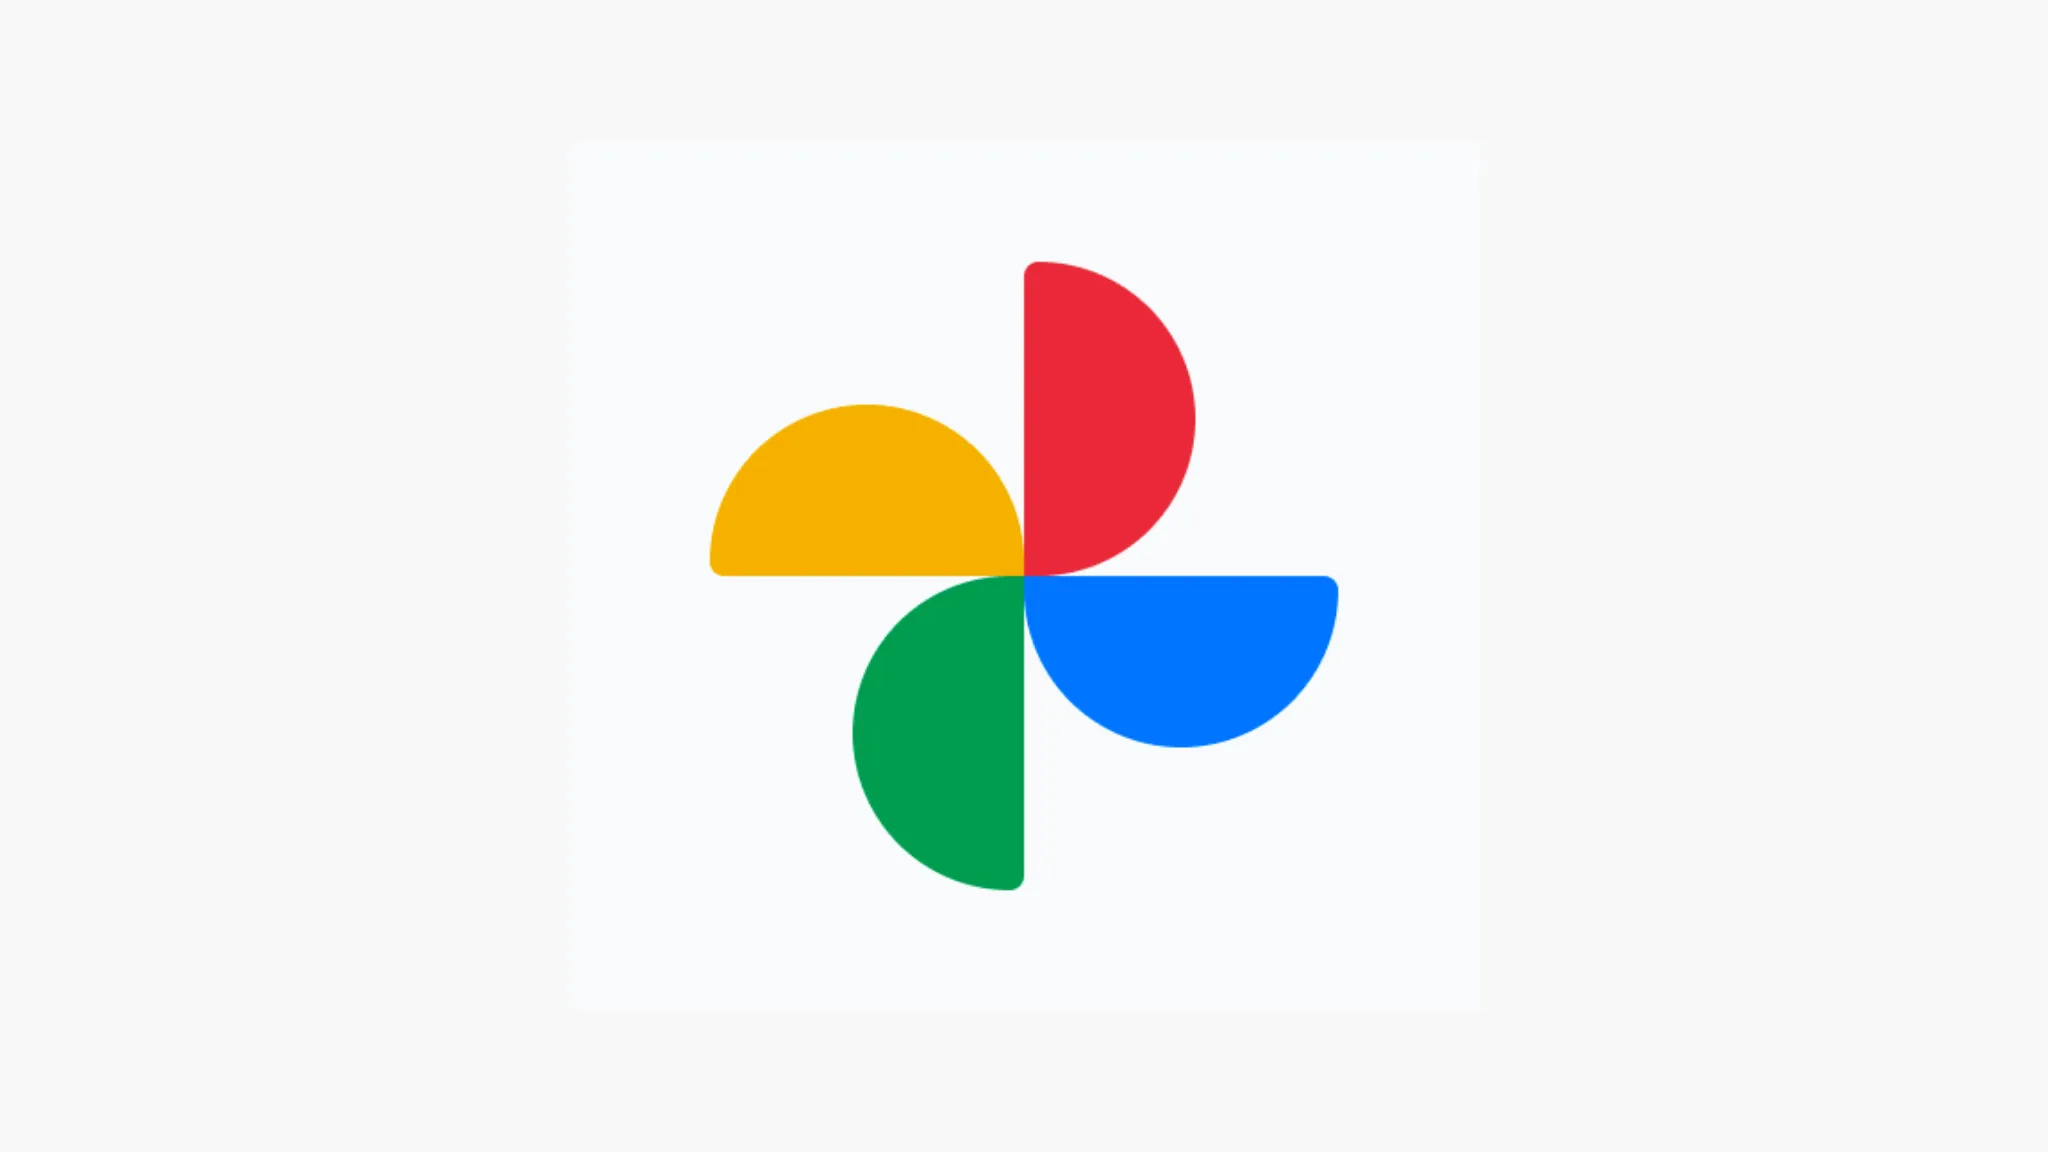 Launch the Google Photos App